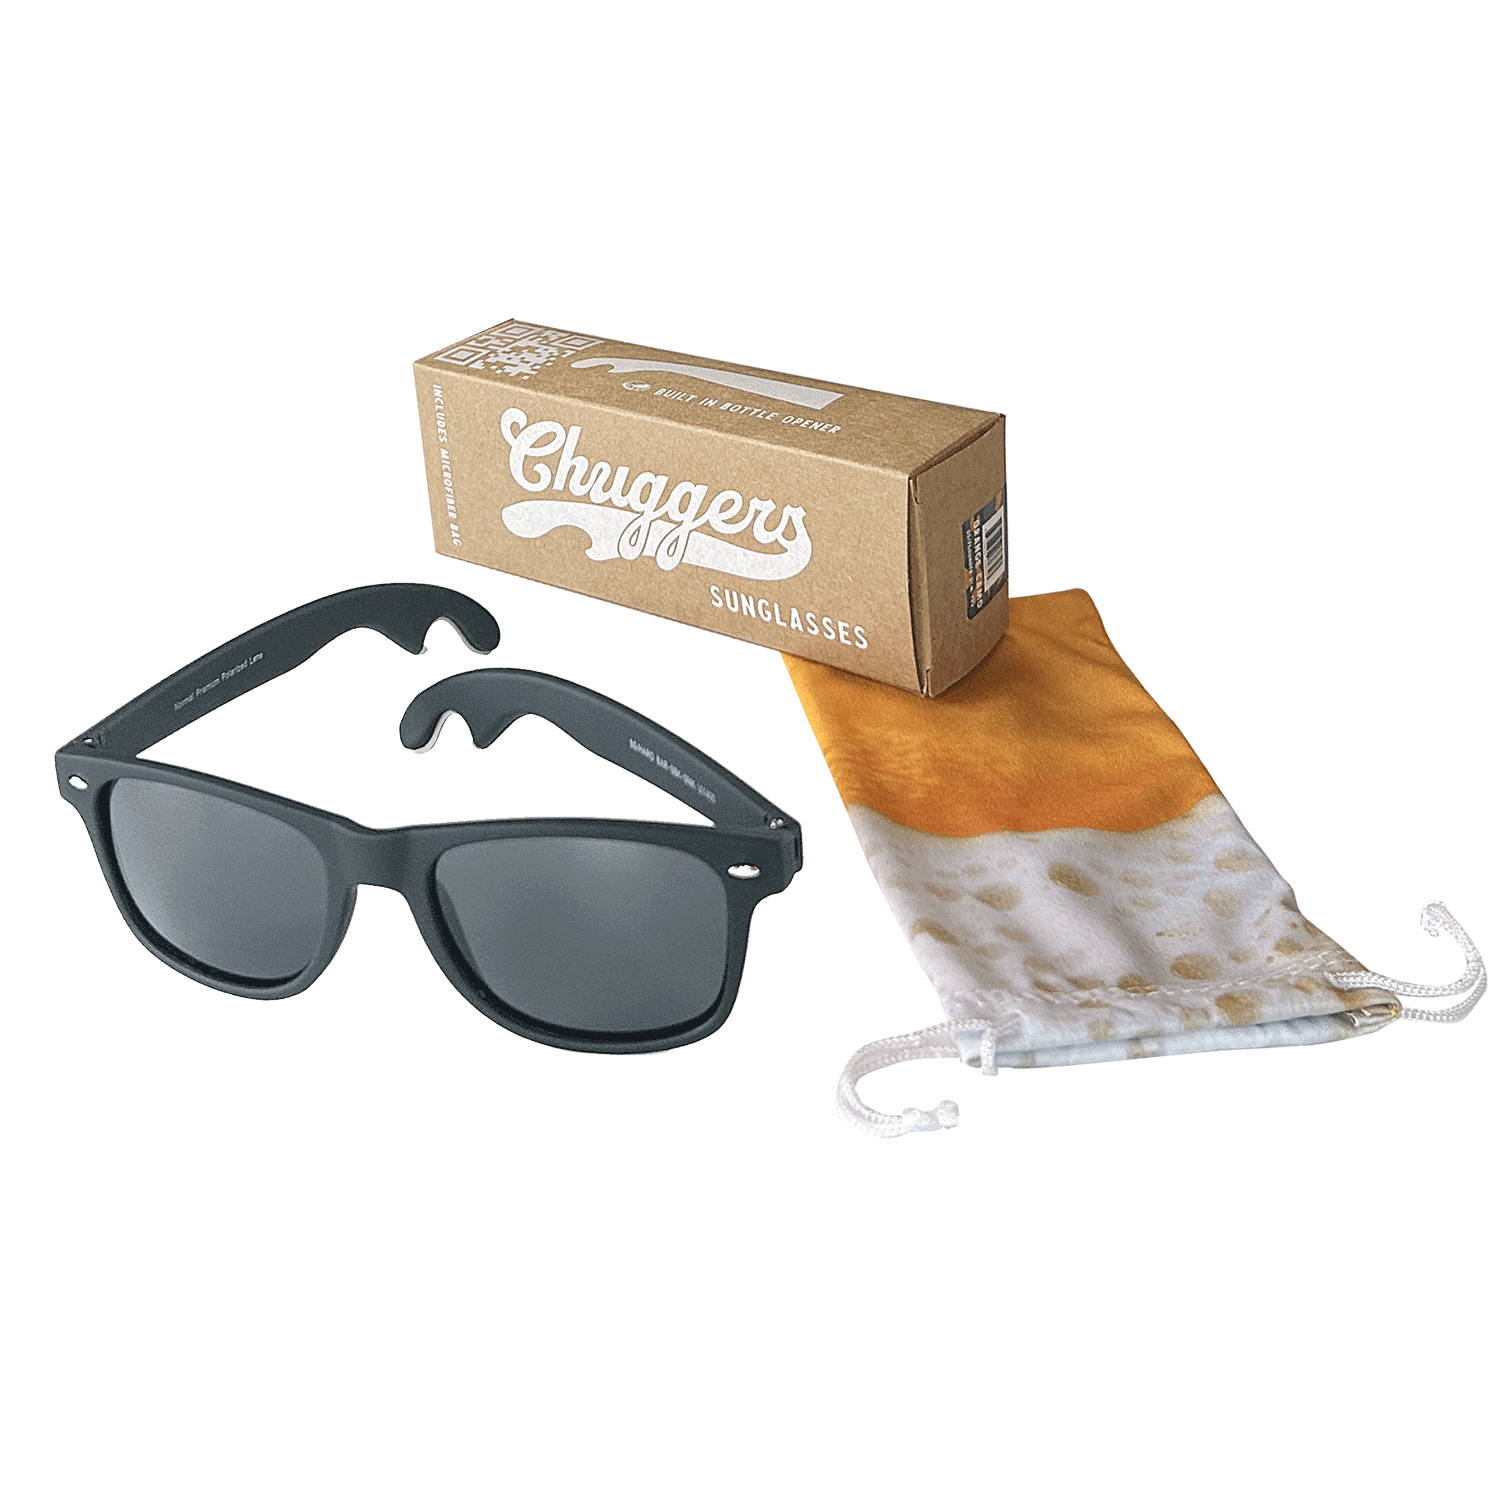 SS/HARD BAR-SBK-SMK – Chugger Eyewear with Temple Sunglasses Black Opener Bottle Brand – SolarX